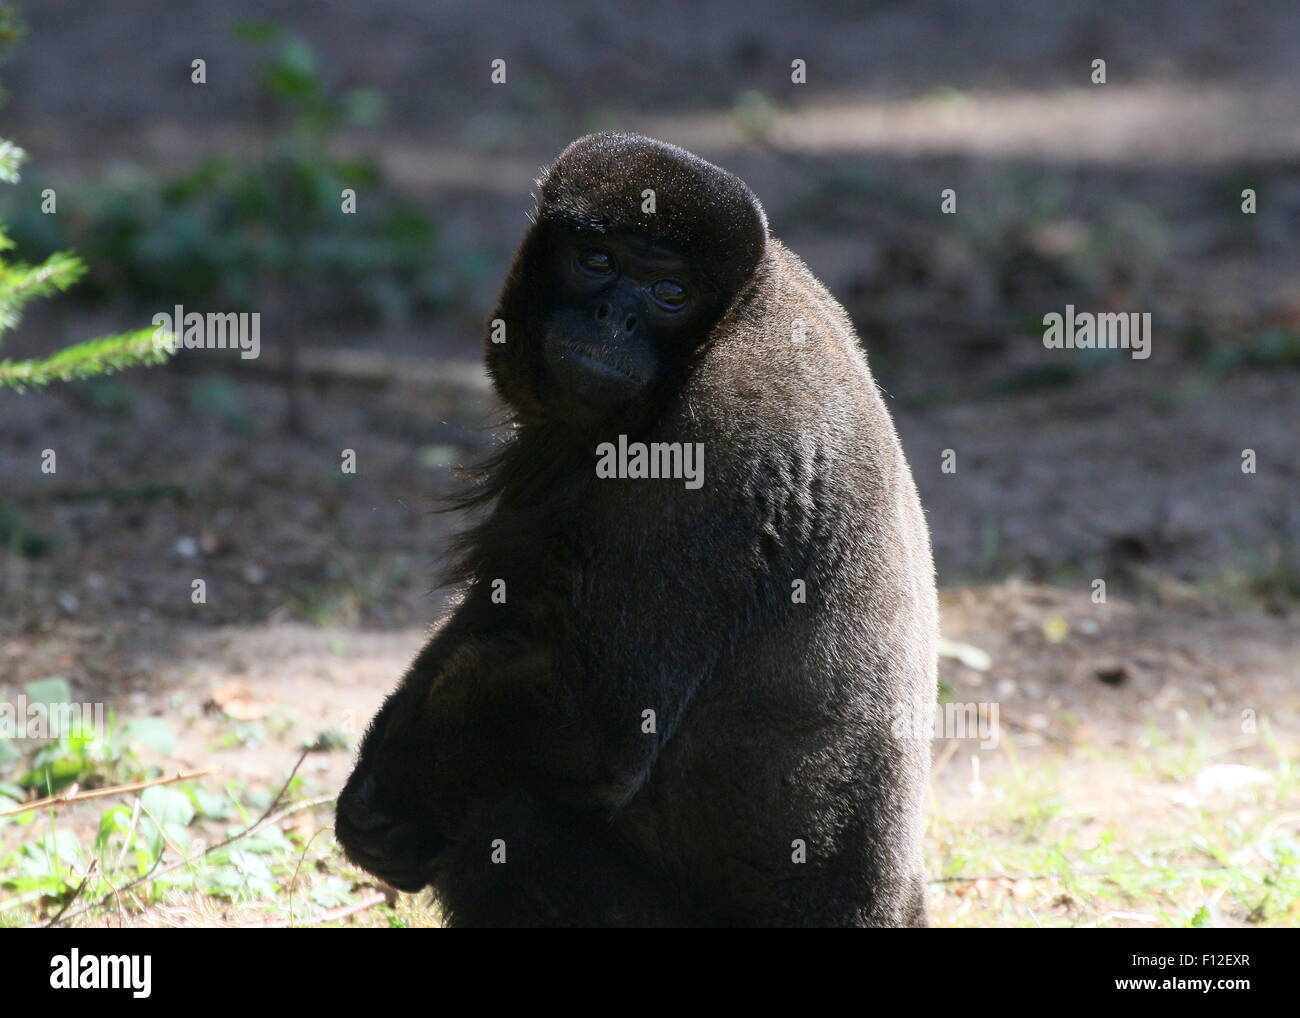 Brown or Humboldt's woolly monkey (Lagothrix lagotricha) looking over his shoulder Stock Photo